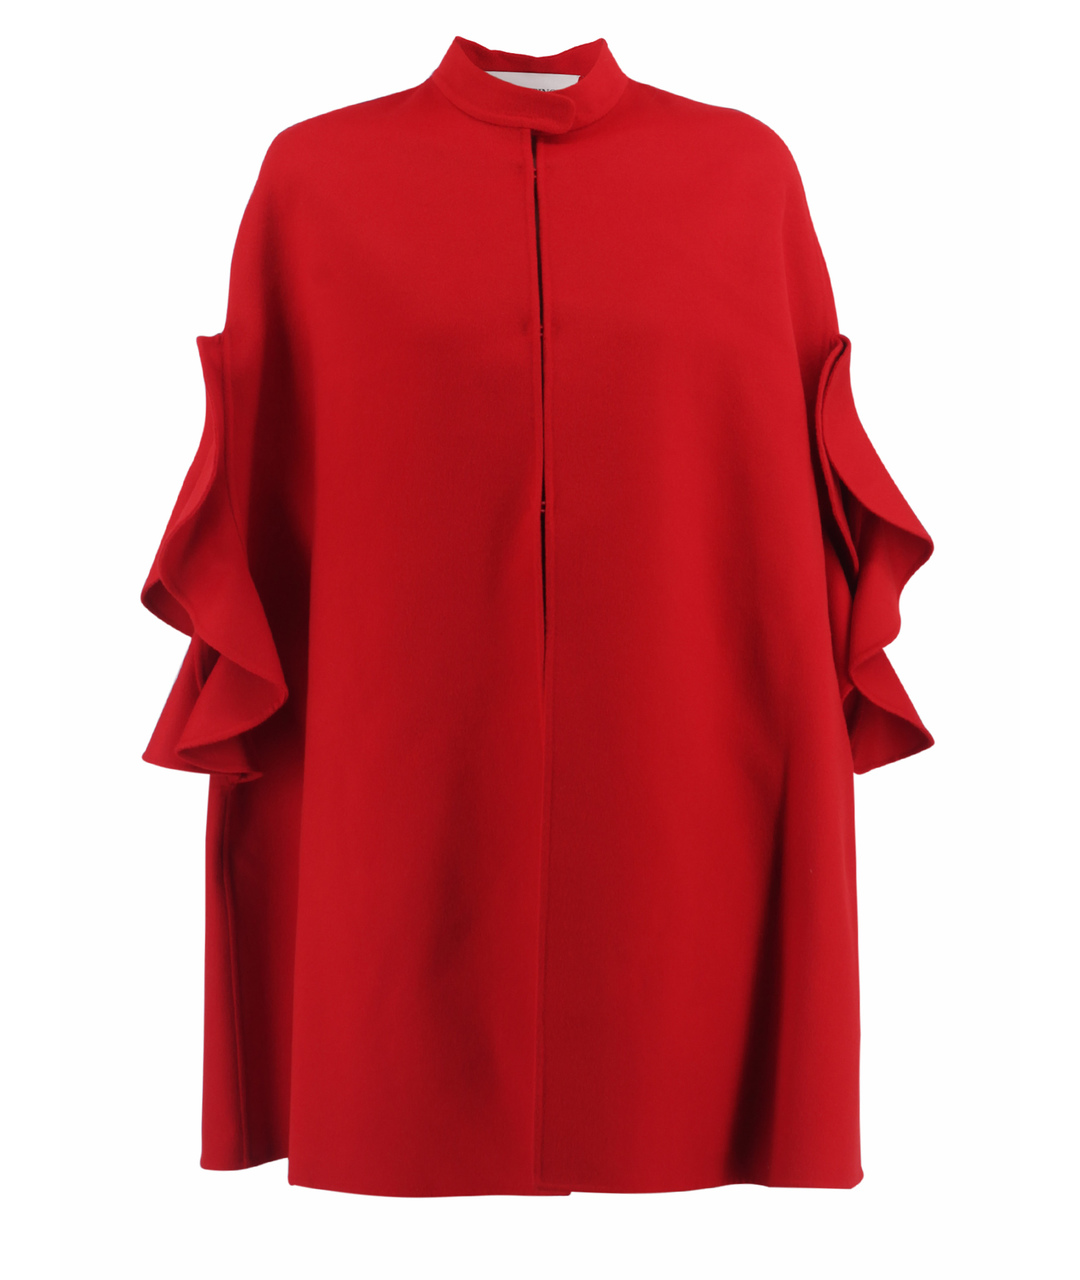 VALENTINO Красное шерстяное пальто, фото 1